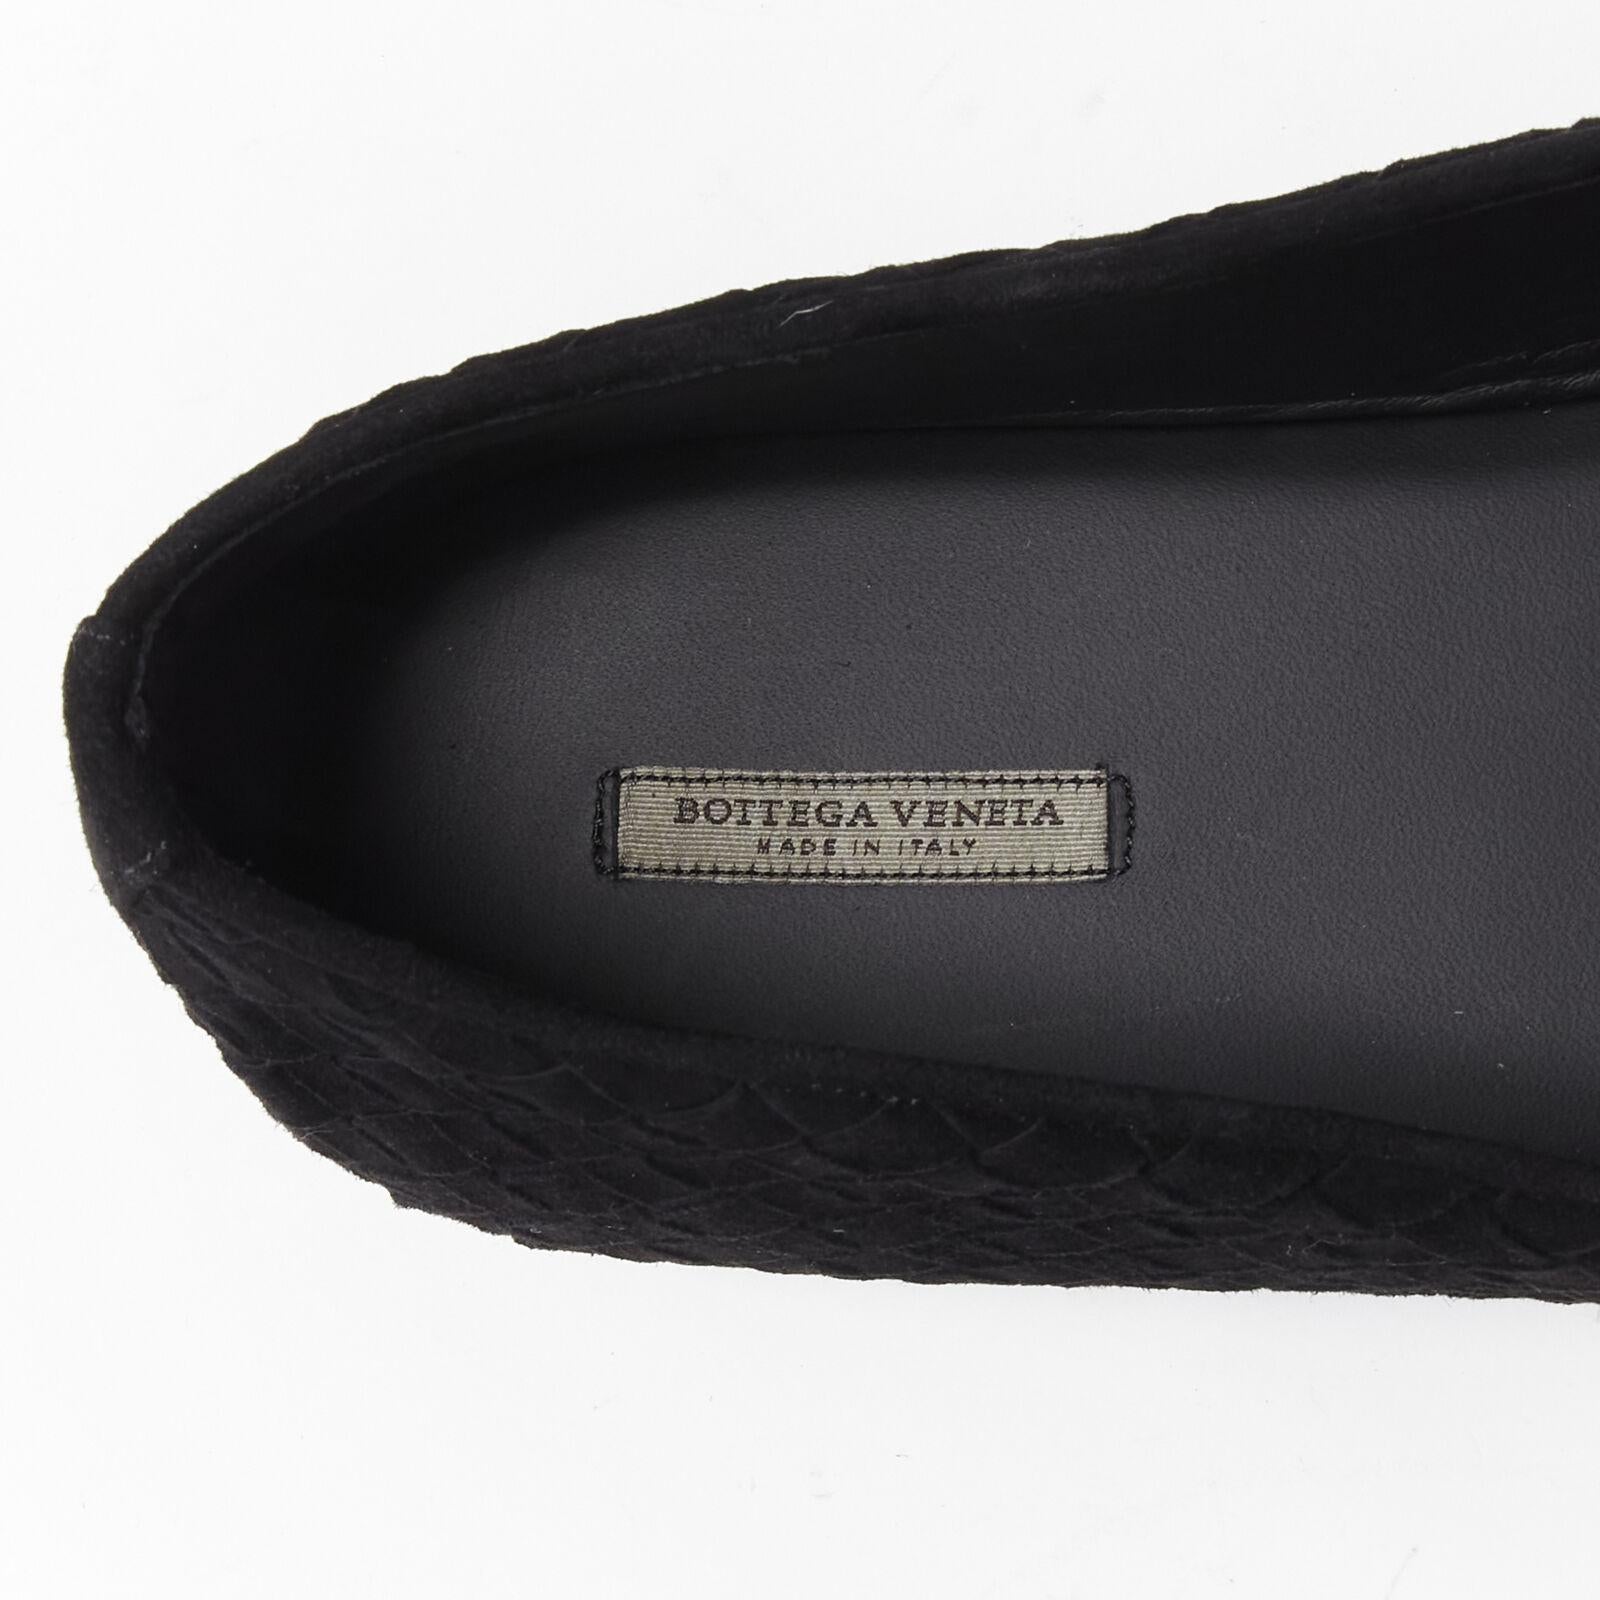 new BOTTEGA VENETA Intrecciato kid suede black woven dress loafer shoes EU43 For Sale 4